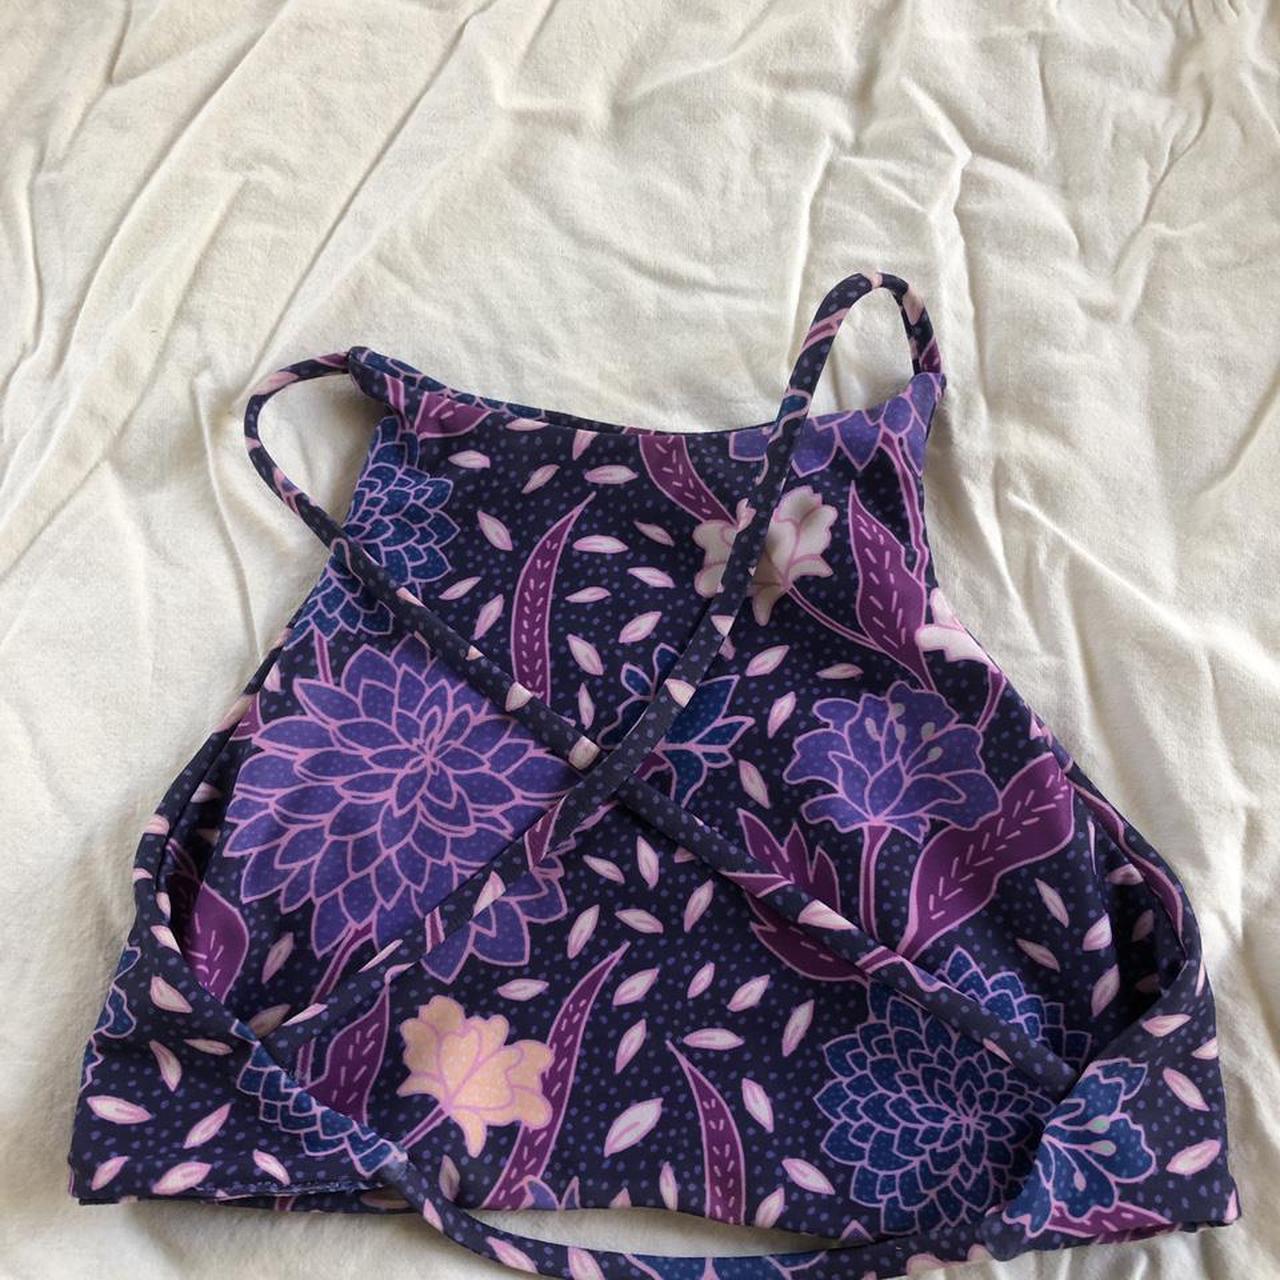 Product Image 2 - Stone Fox bikini swimsuit

Listed as